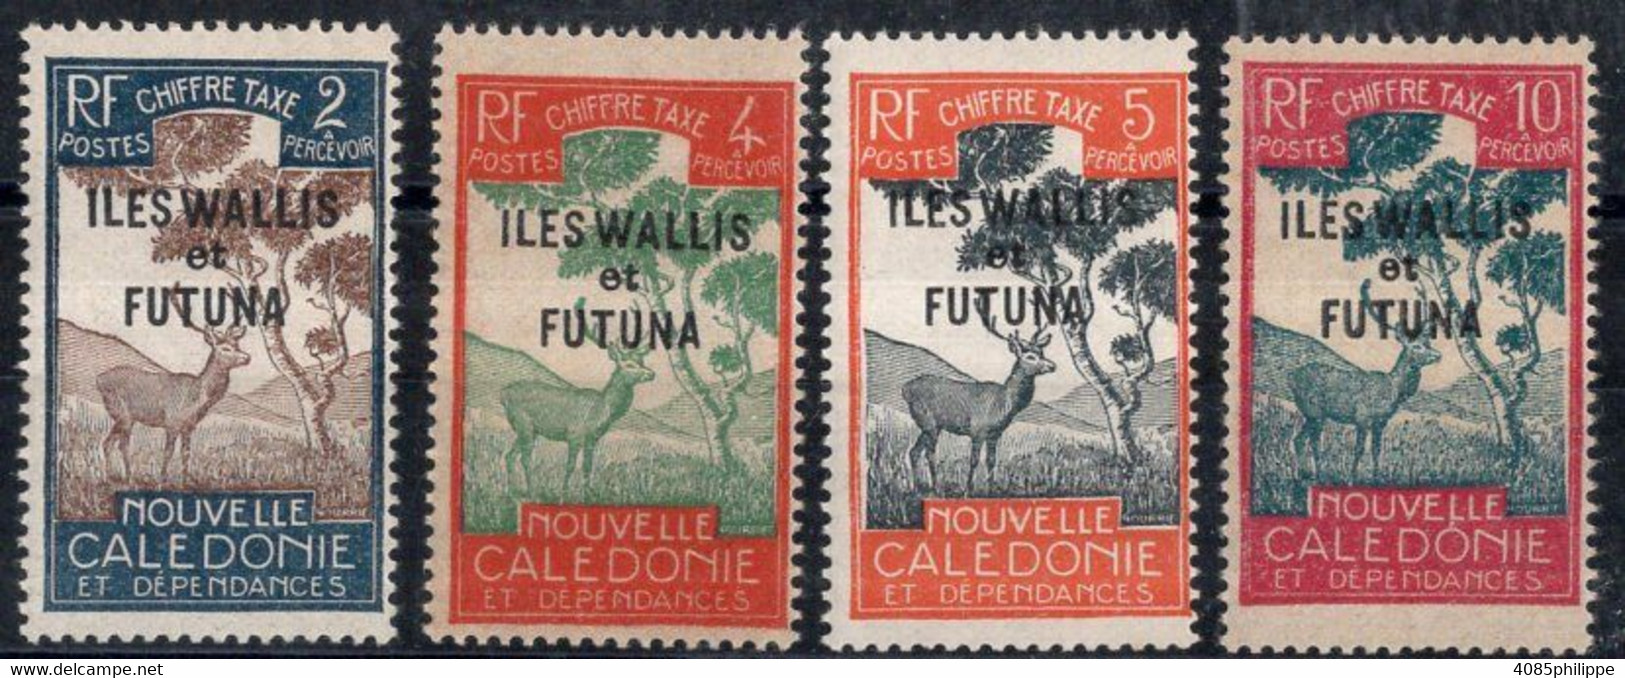 Wallis & Futuna Timbres-Taxe N°11 à 14** Neufs Sans Charnières TB Cote 3.50€ - Timbres-taxe